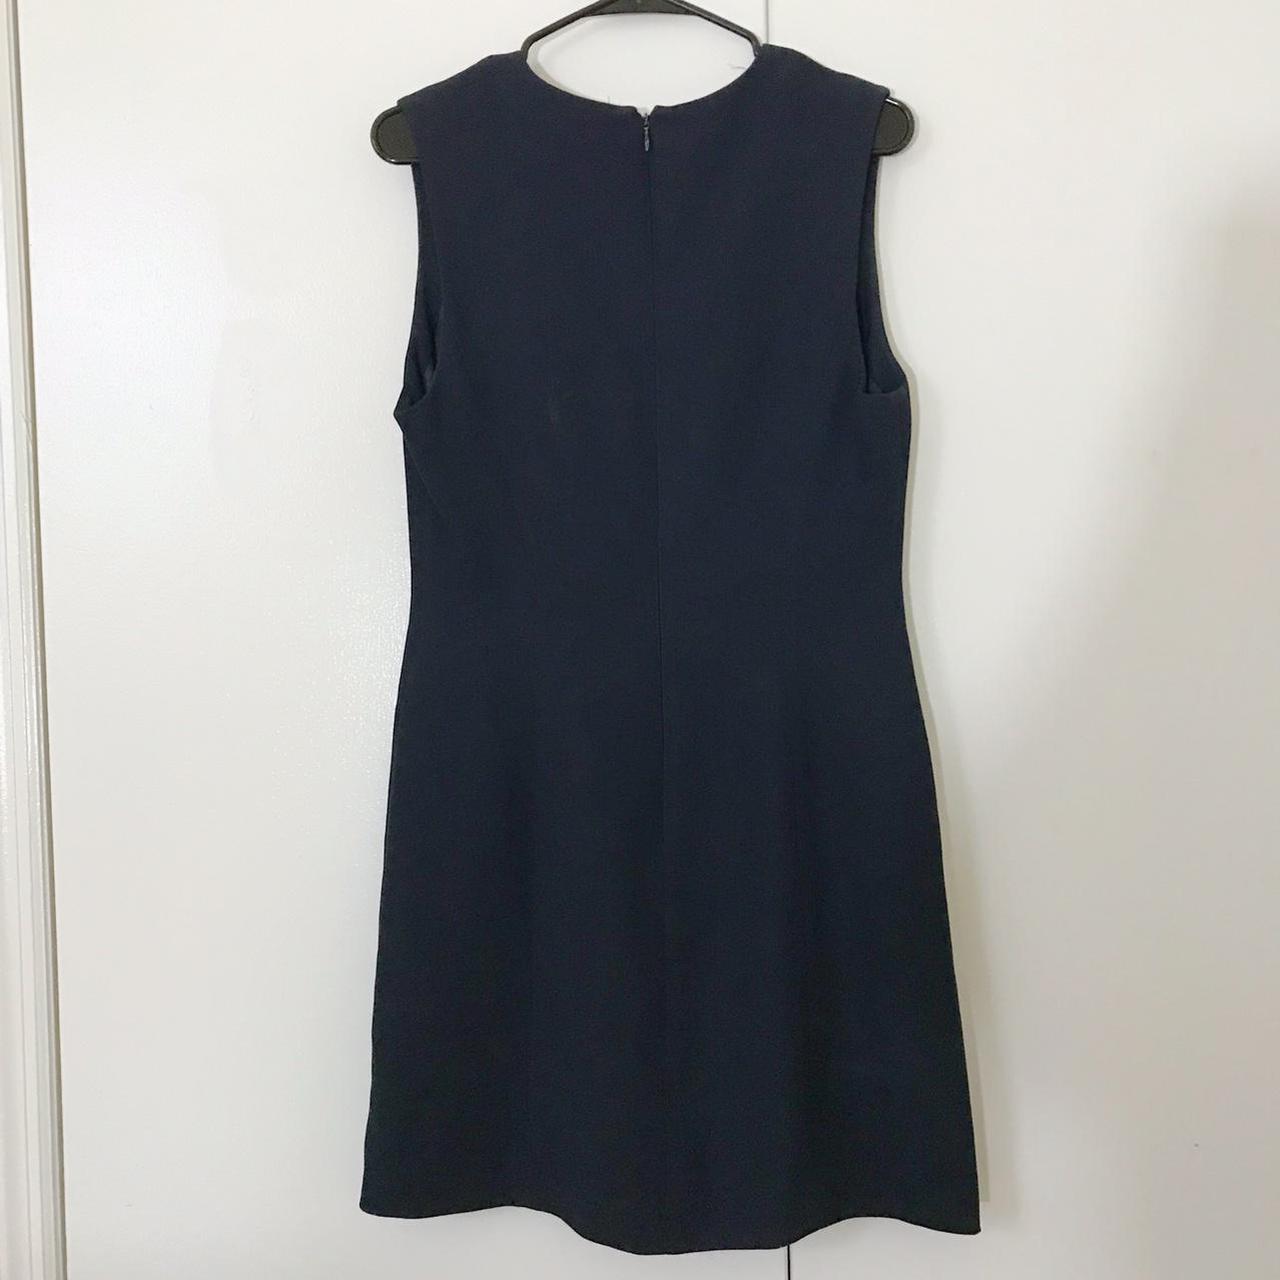 Vintage Liz Claiborne navy blue dress size 8.... - Depop